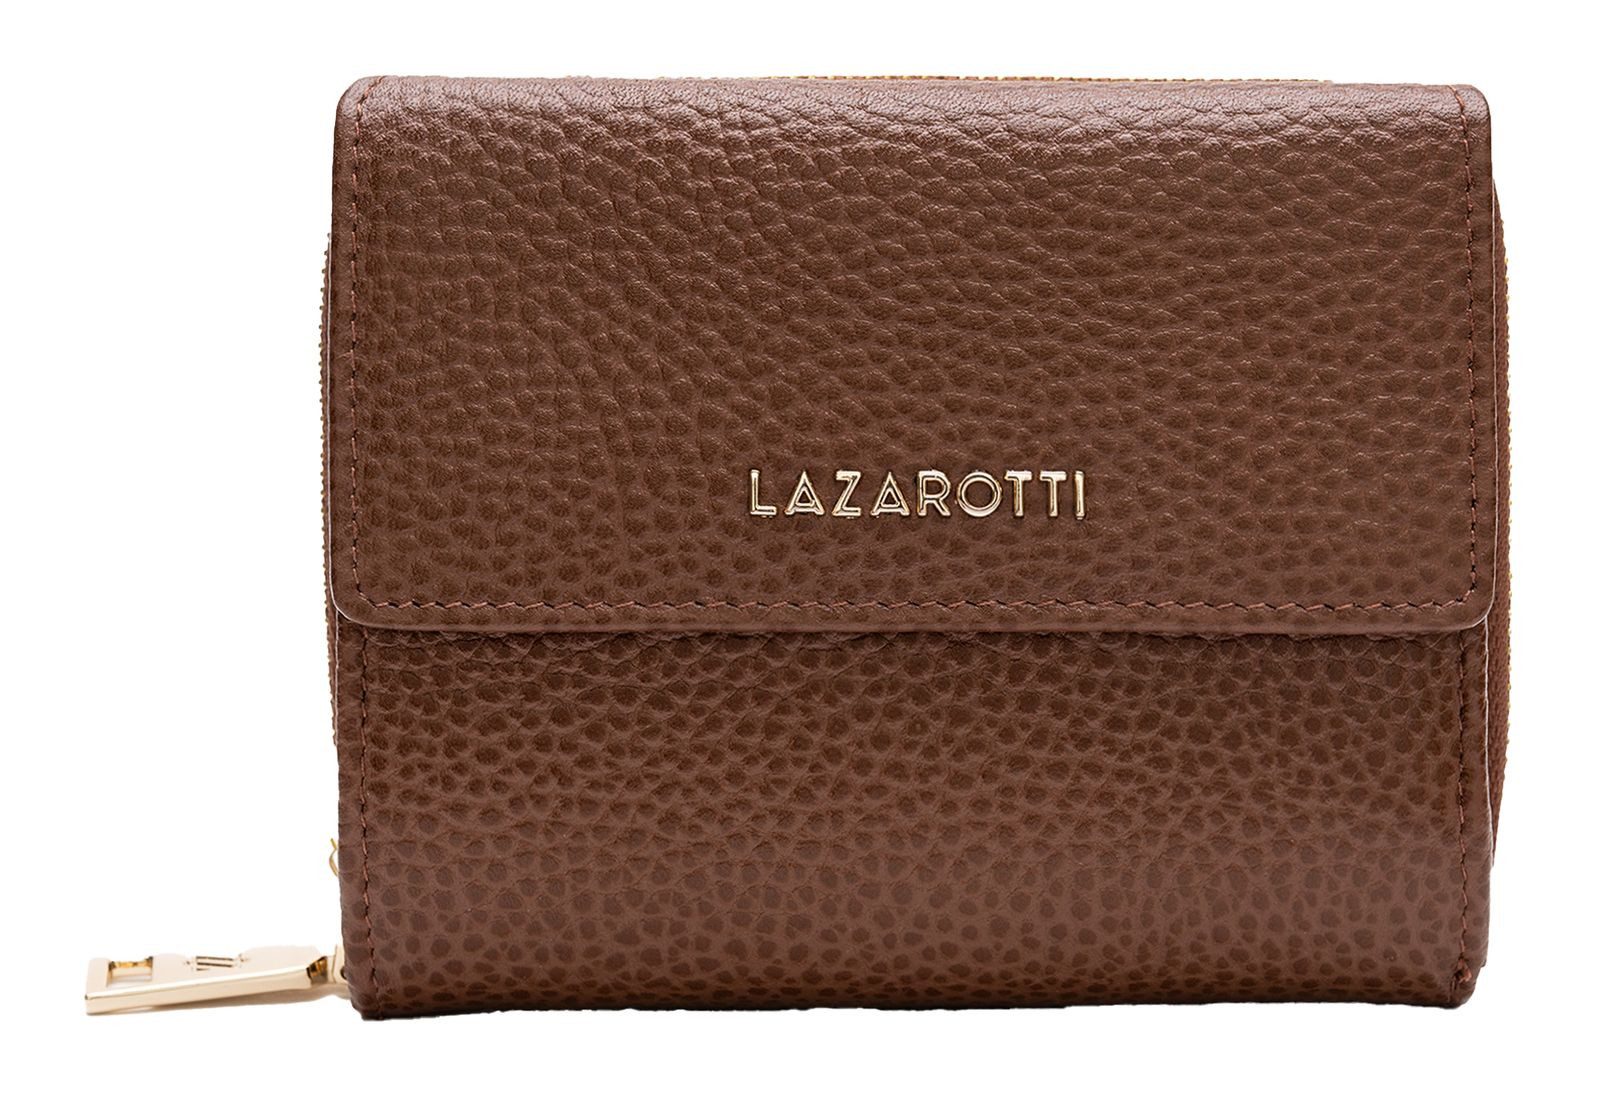 Lazarotti Geldbörse Bologna Leather, aus echtem Leder